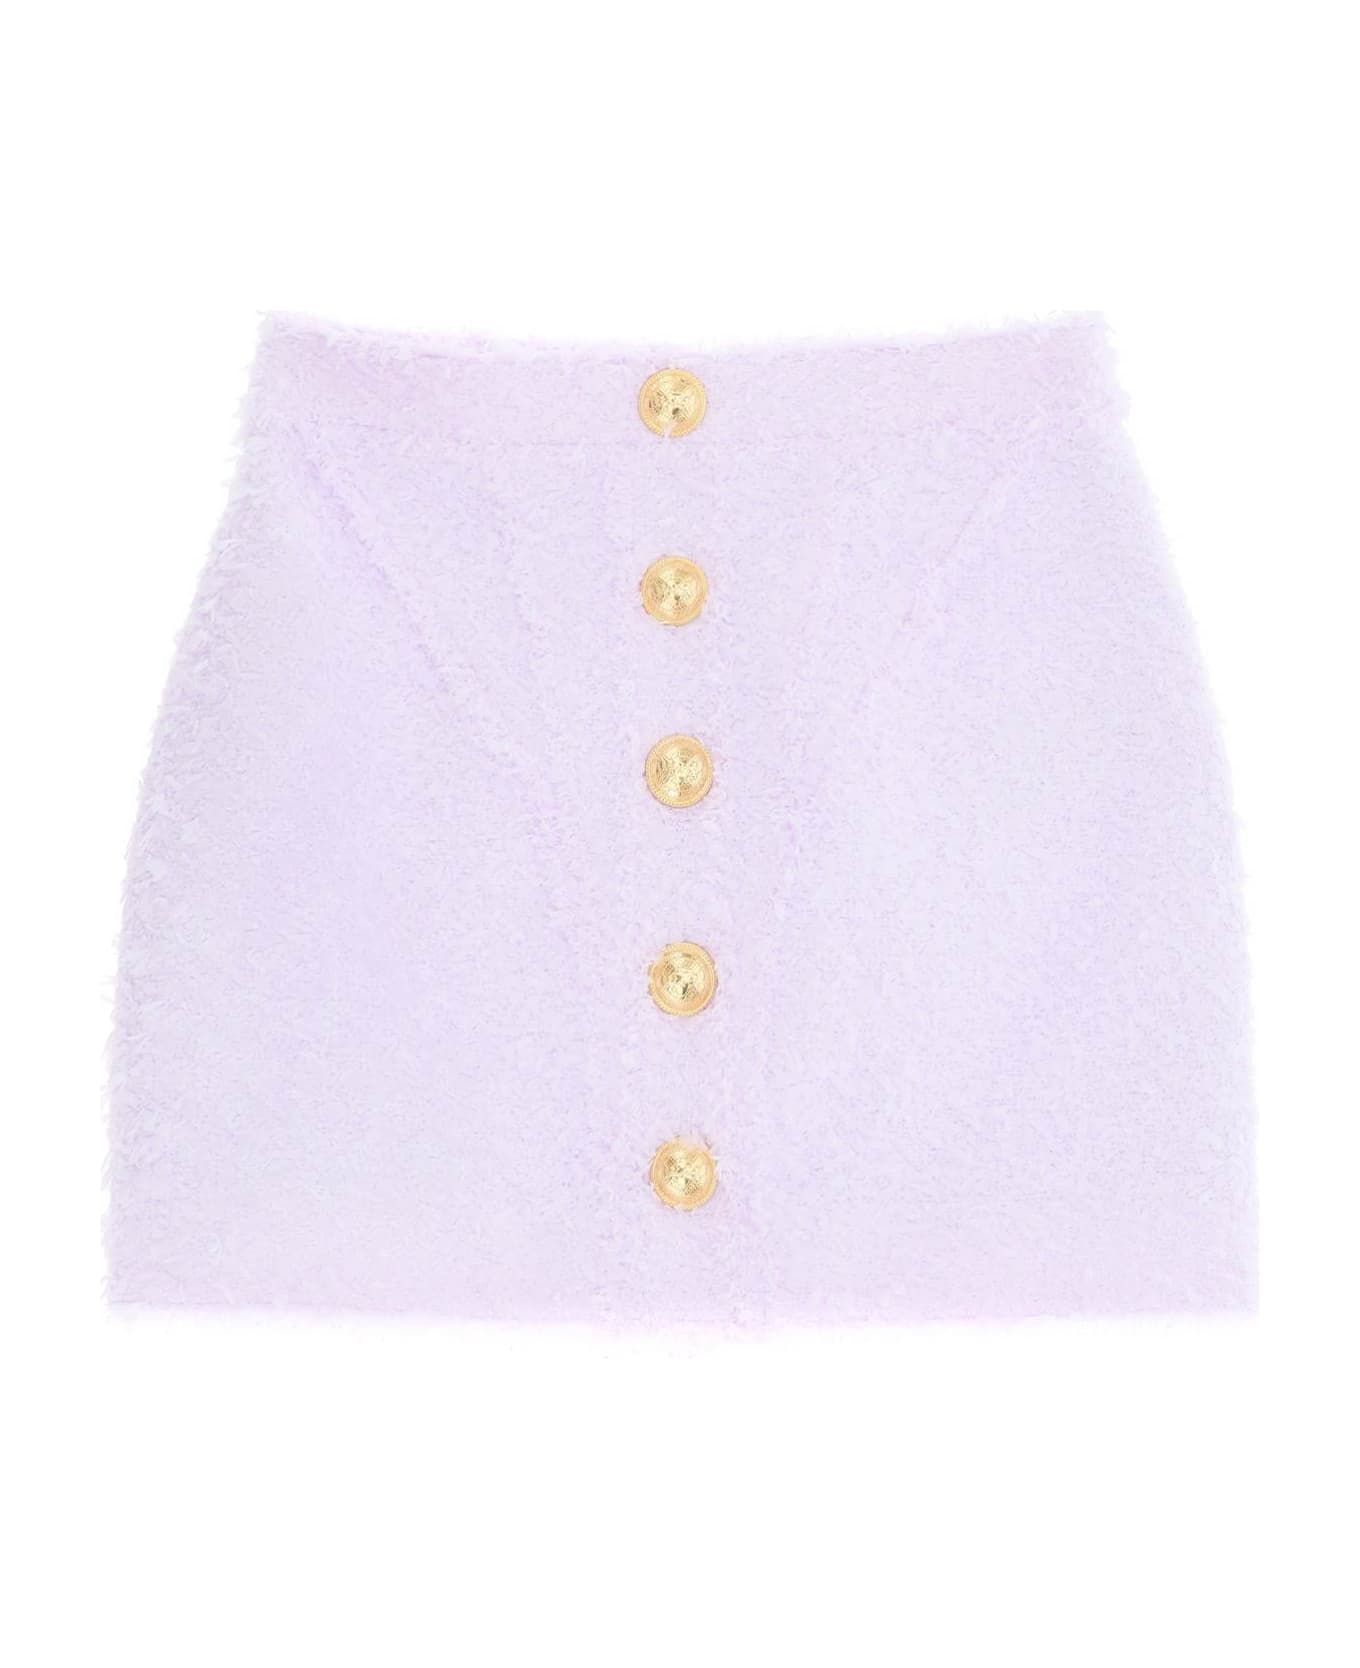 Balmain Tweed Mini-skirt - Lilac スカート